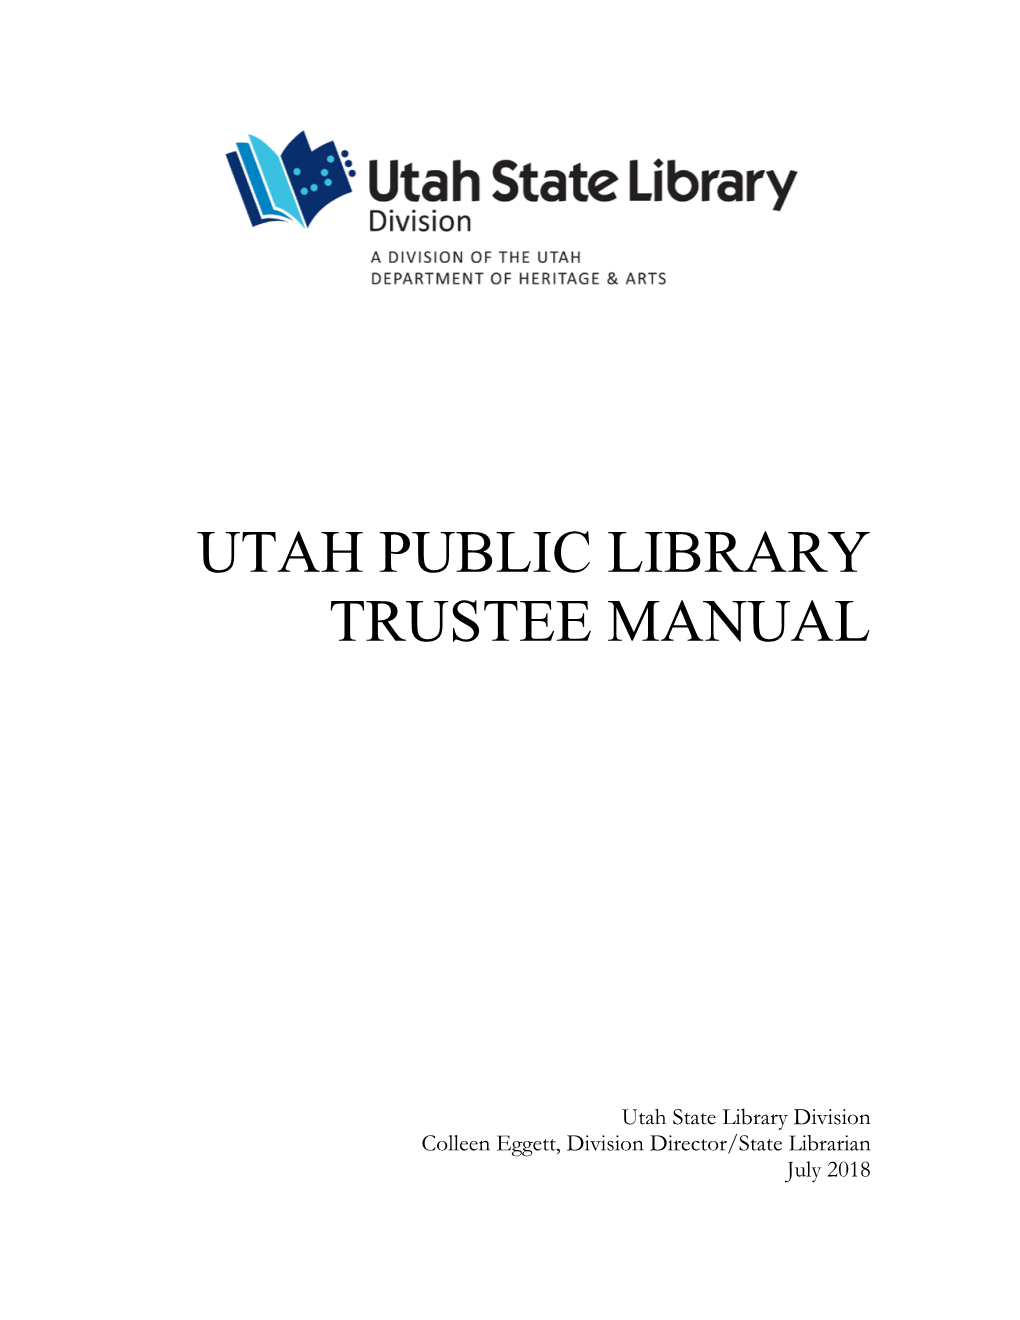 Utah Public Library Trustee Manual, July 2018